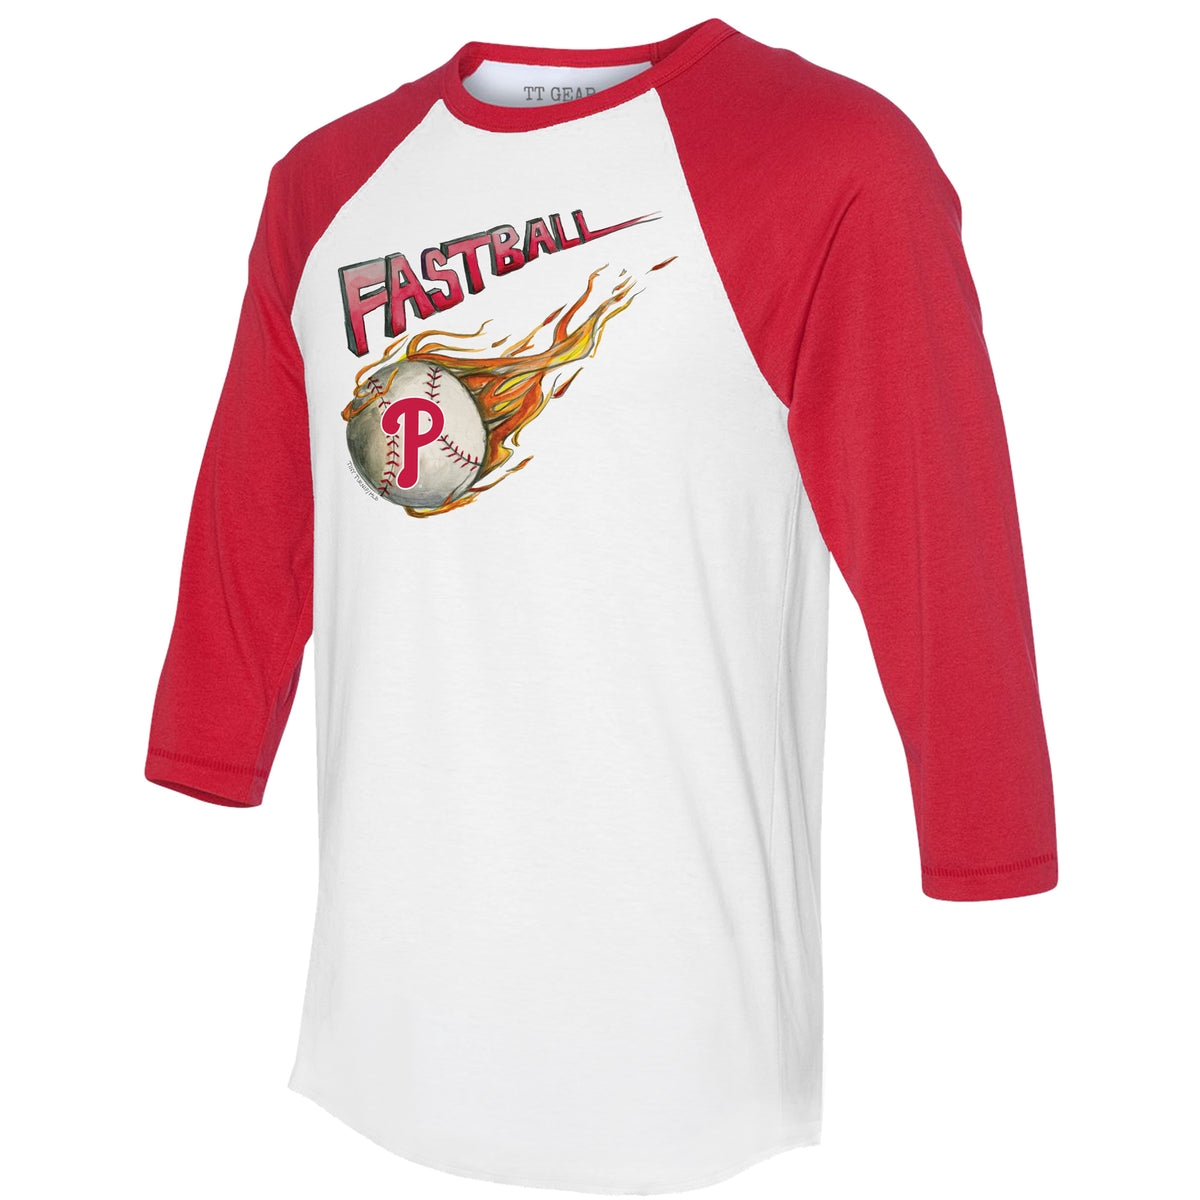 Philadelphia Phillies Fastball 3/4 Red Sleeve Raglan